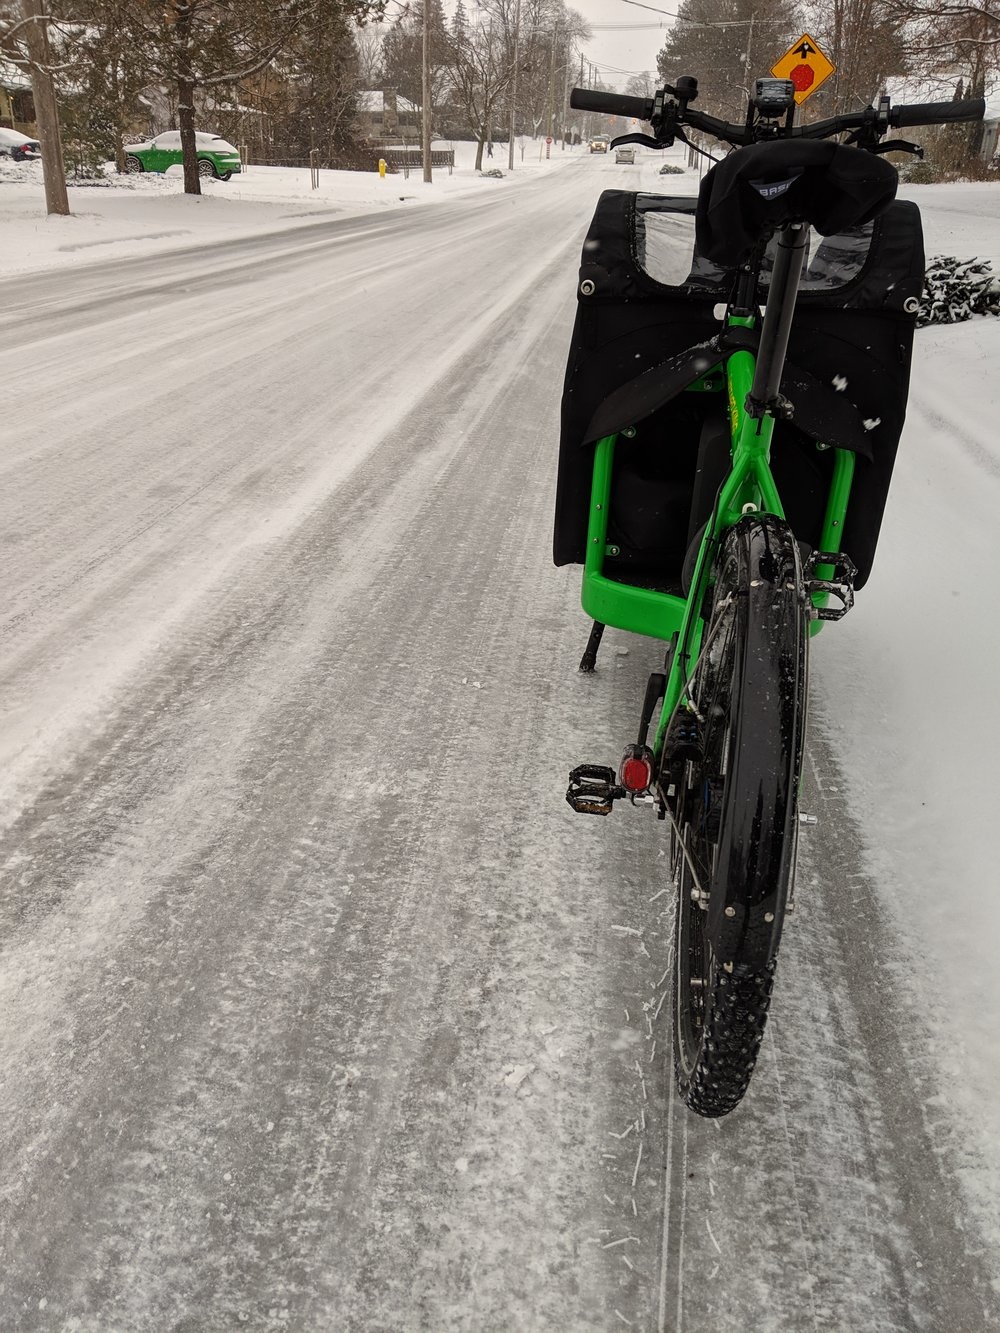 Another view of the green Bullitt long john bike on a snowy path